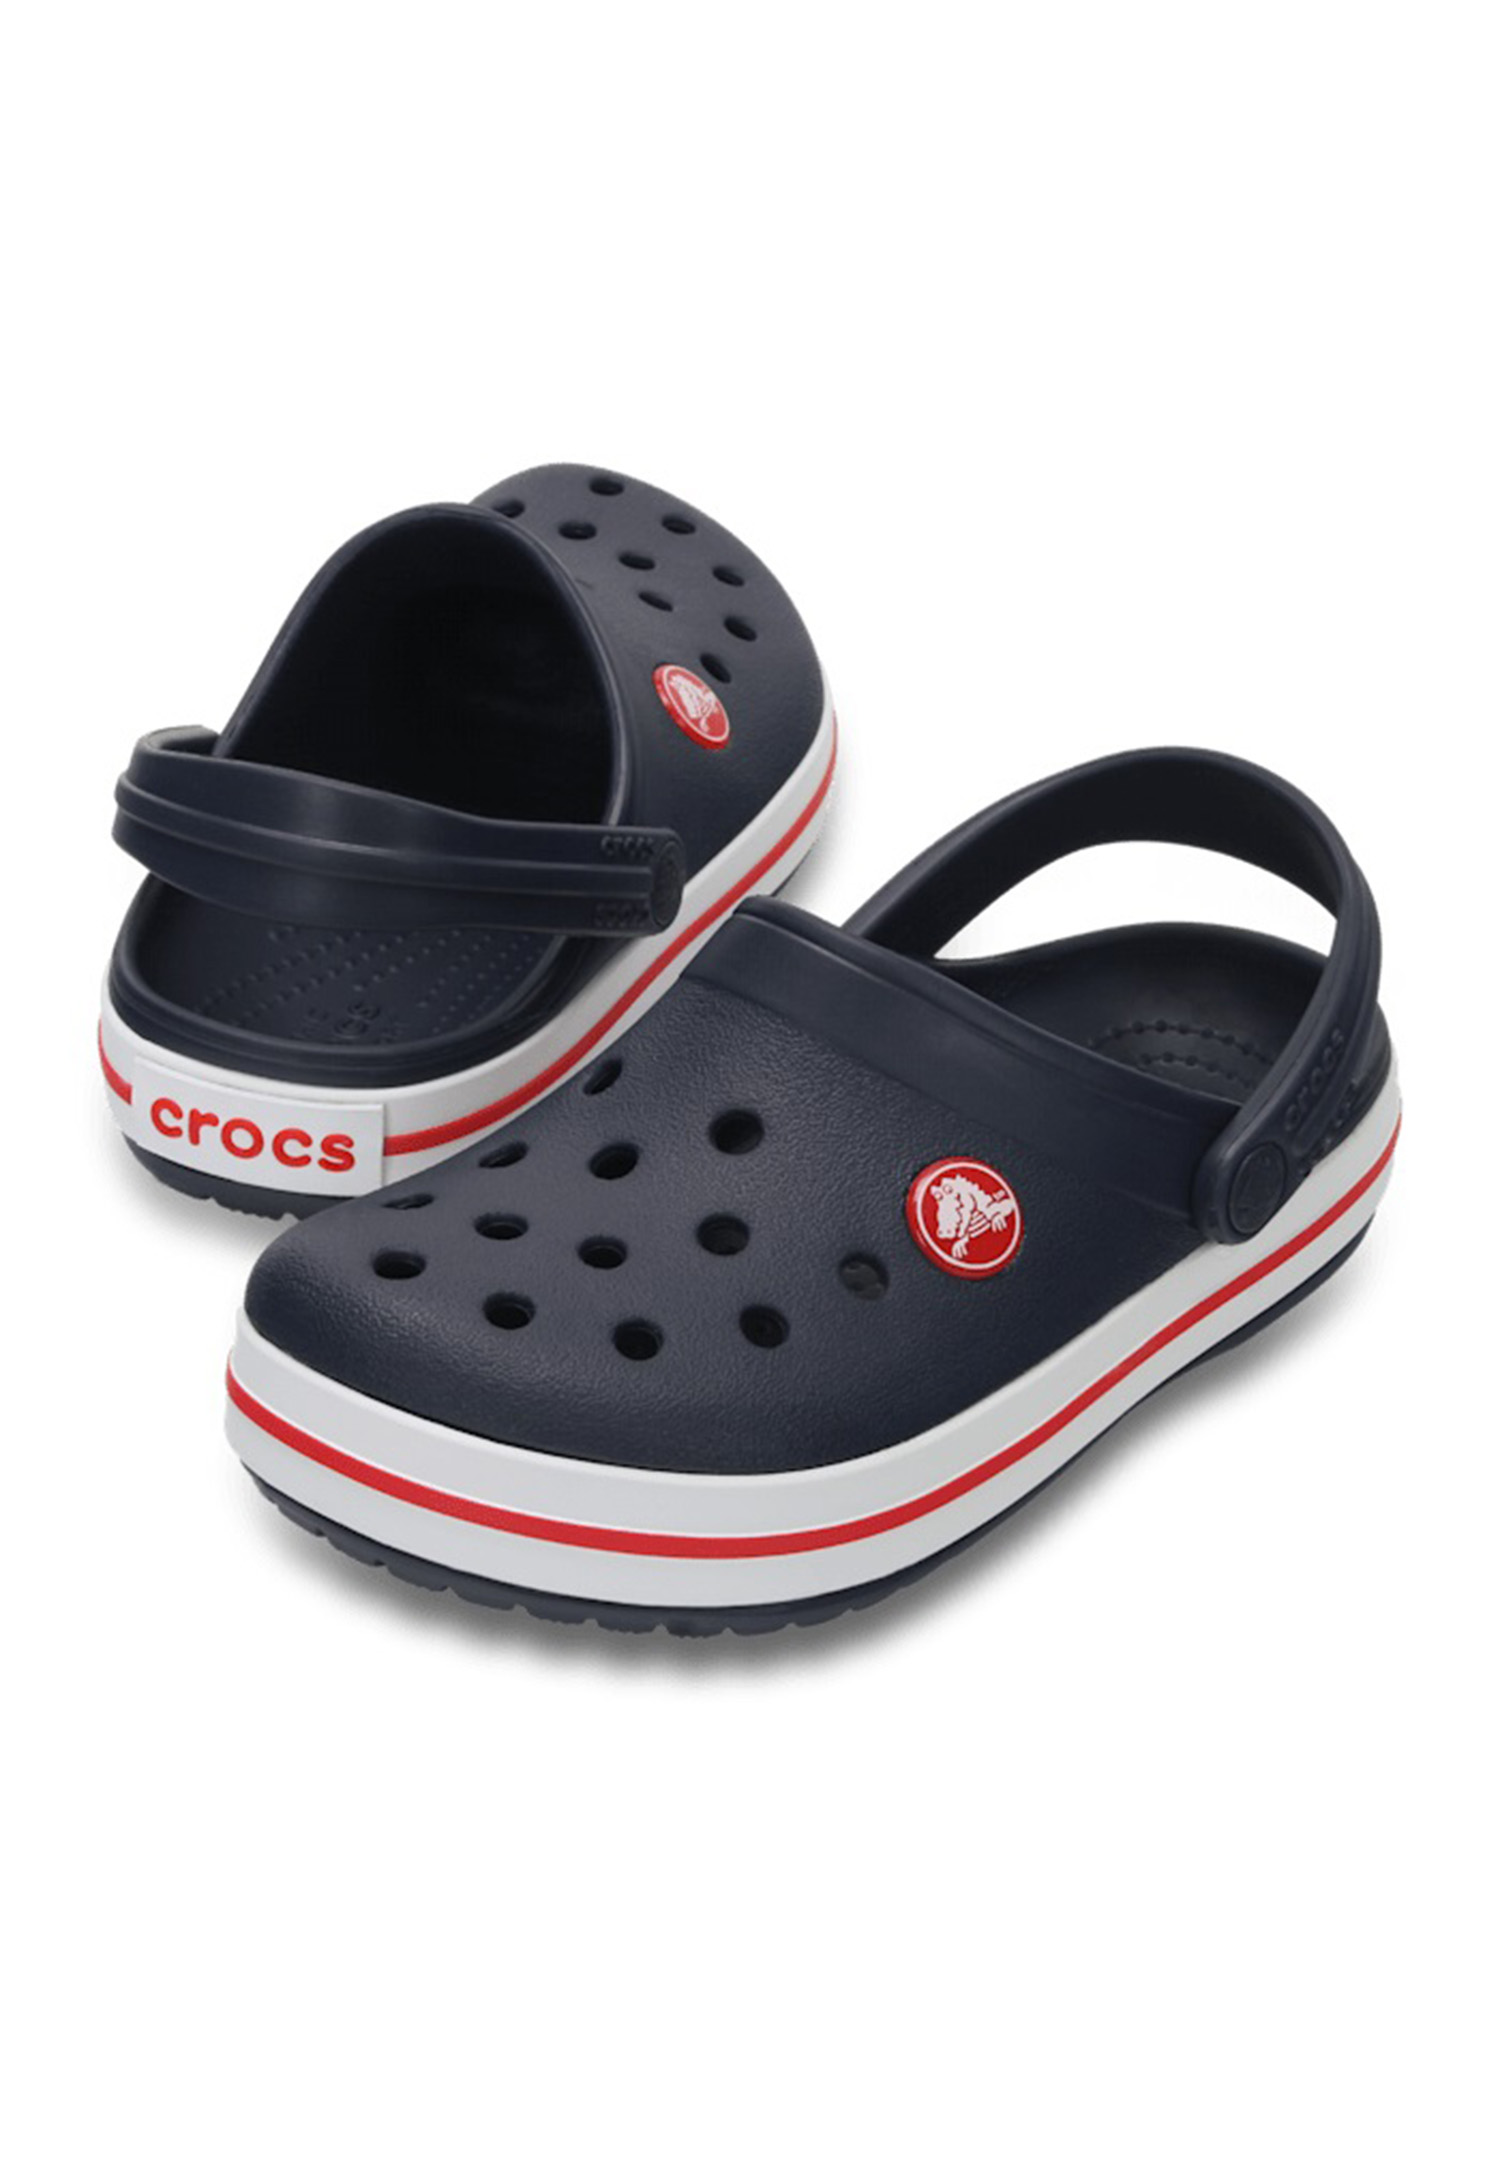 Crocs Kids Crocband Clog Unisex Kinder Schuhe Sandalen 207006 Dunkelblau von Crocs